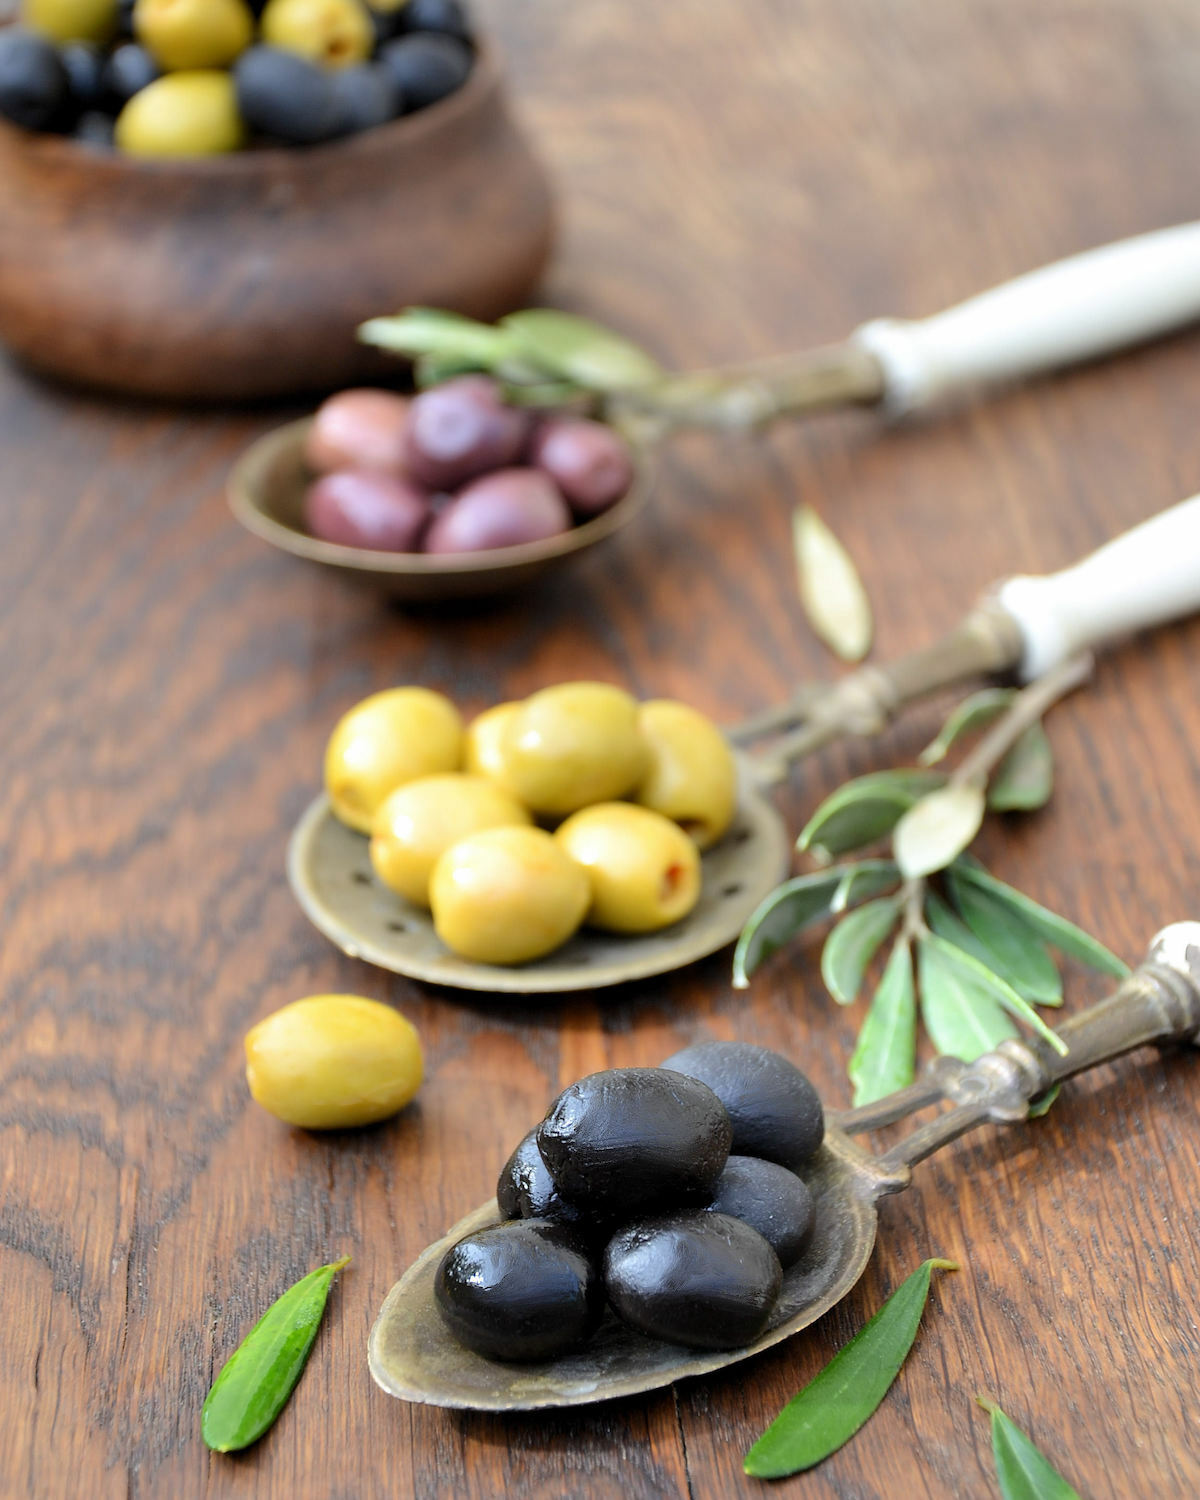 Olives ©TGTGTG shutterstock